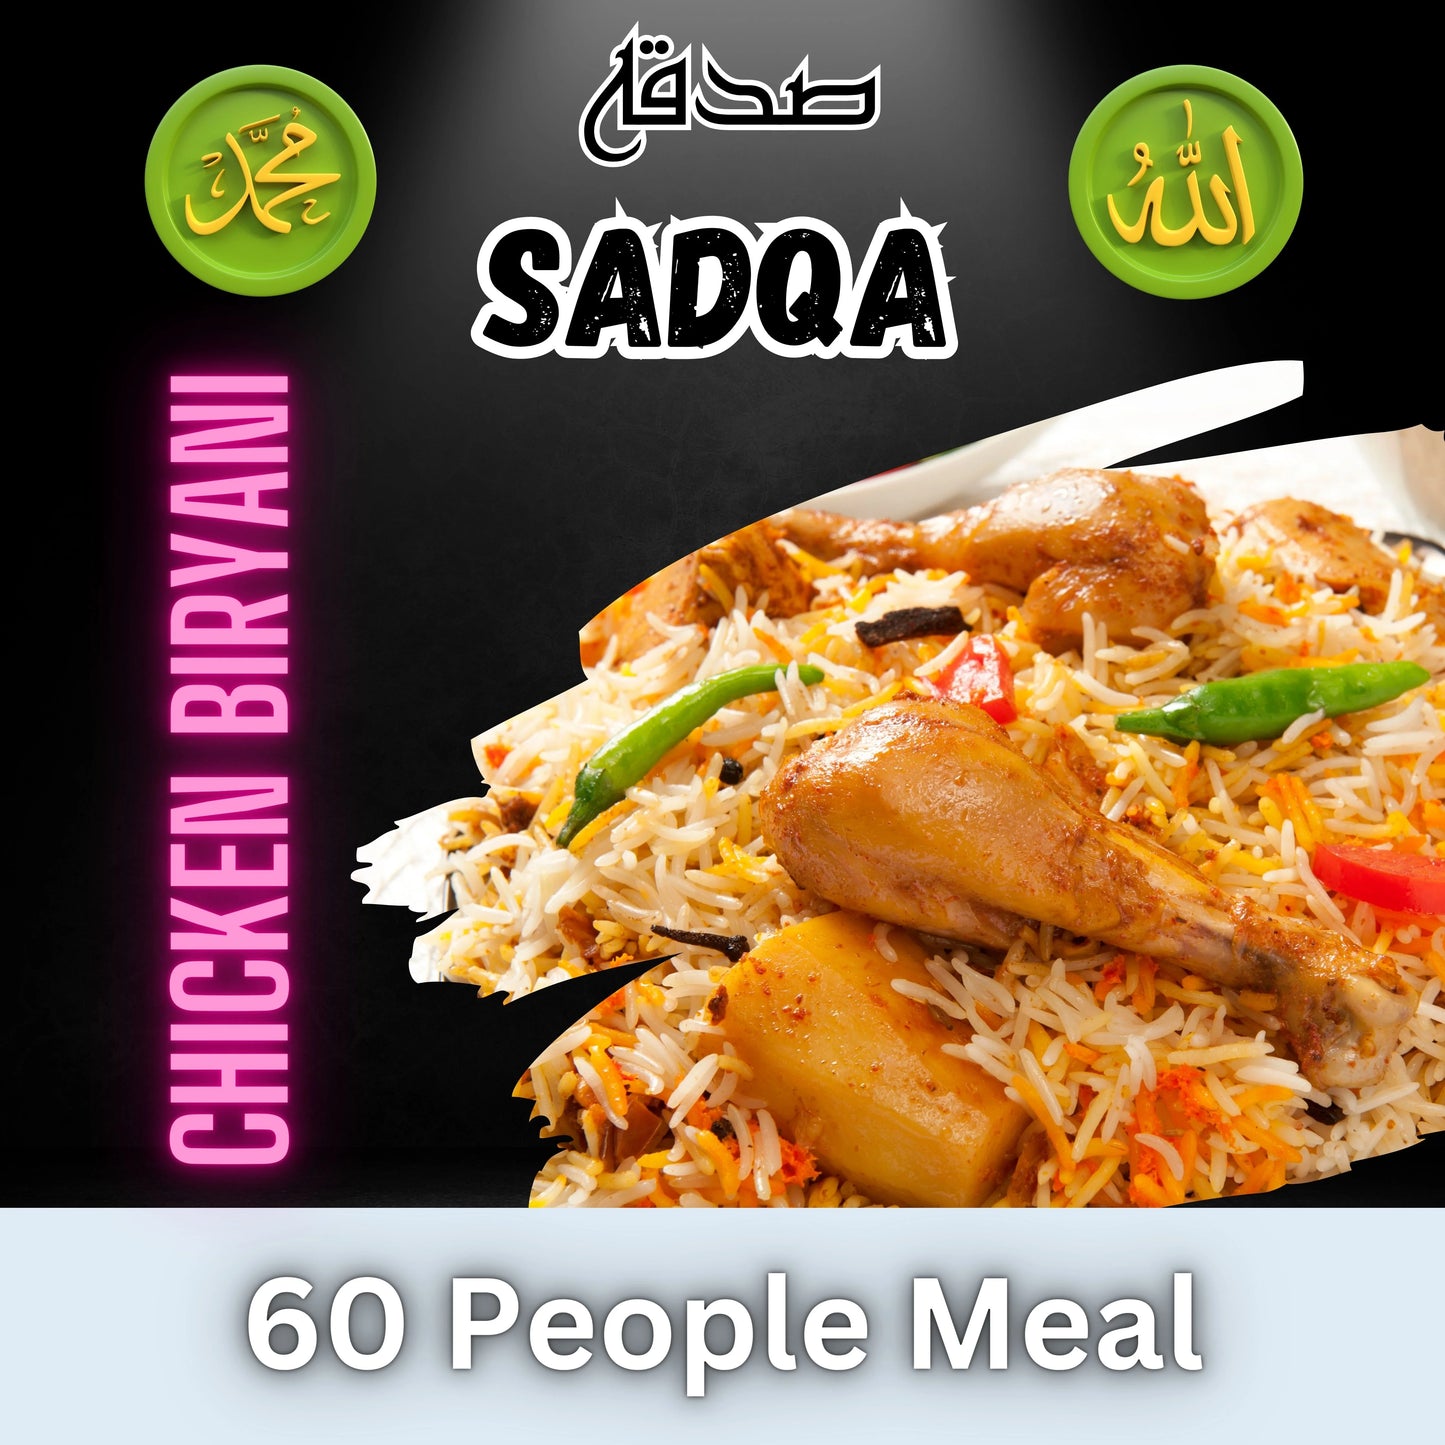 Sadqah meal for 60 people chicken biryani